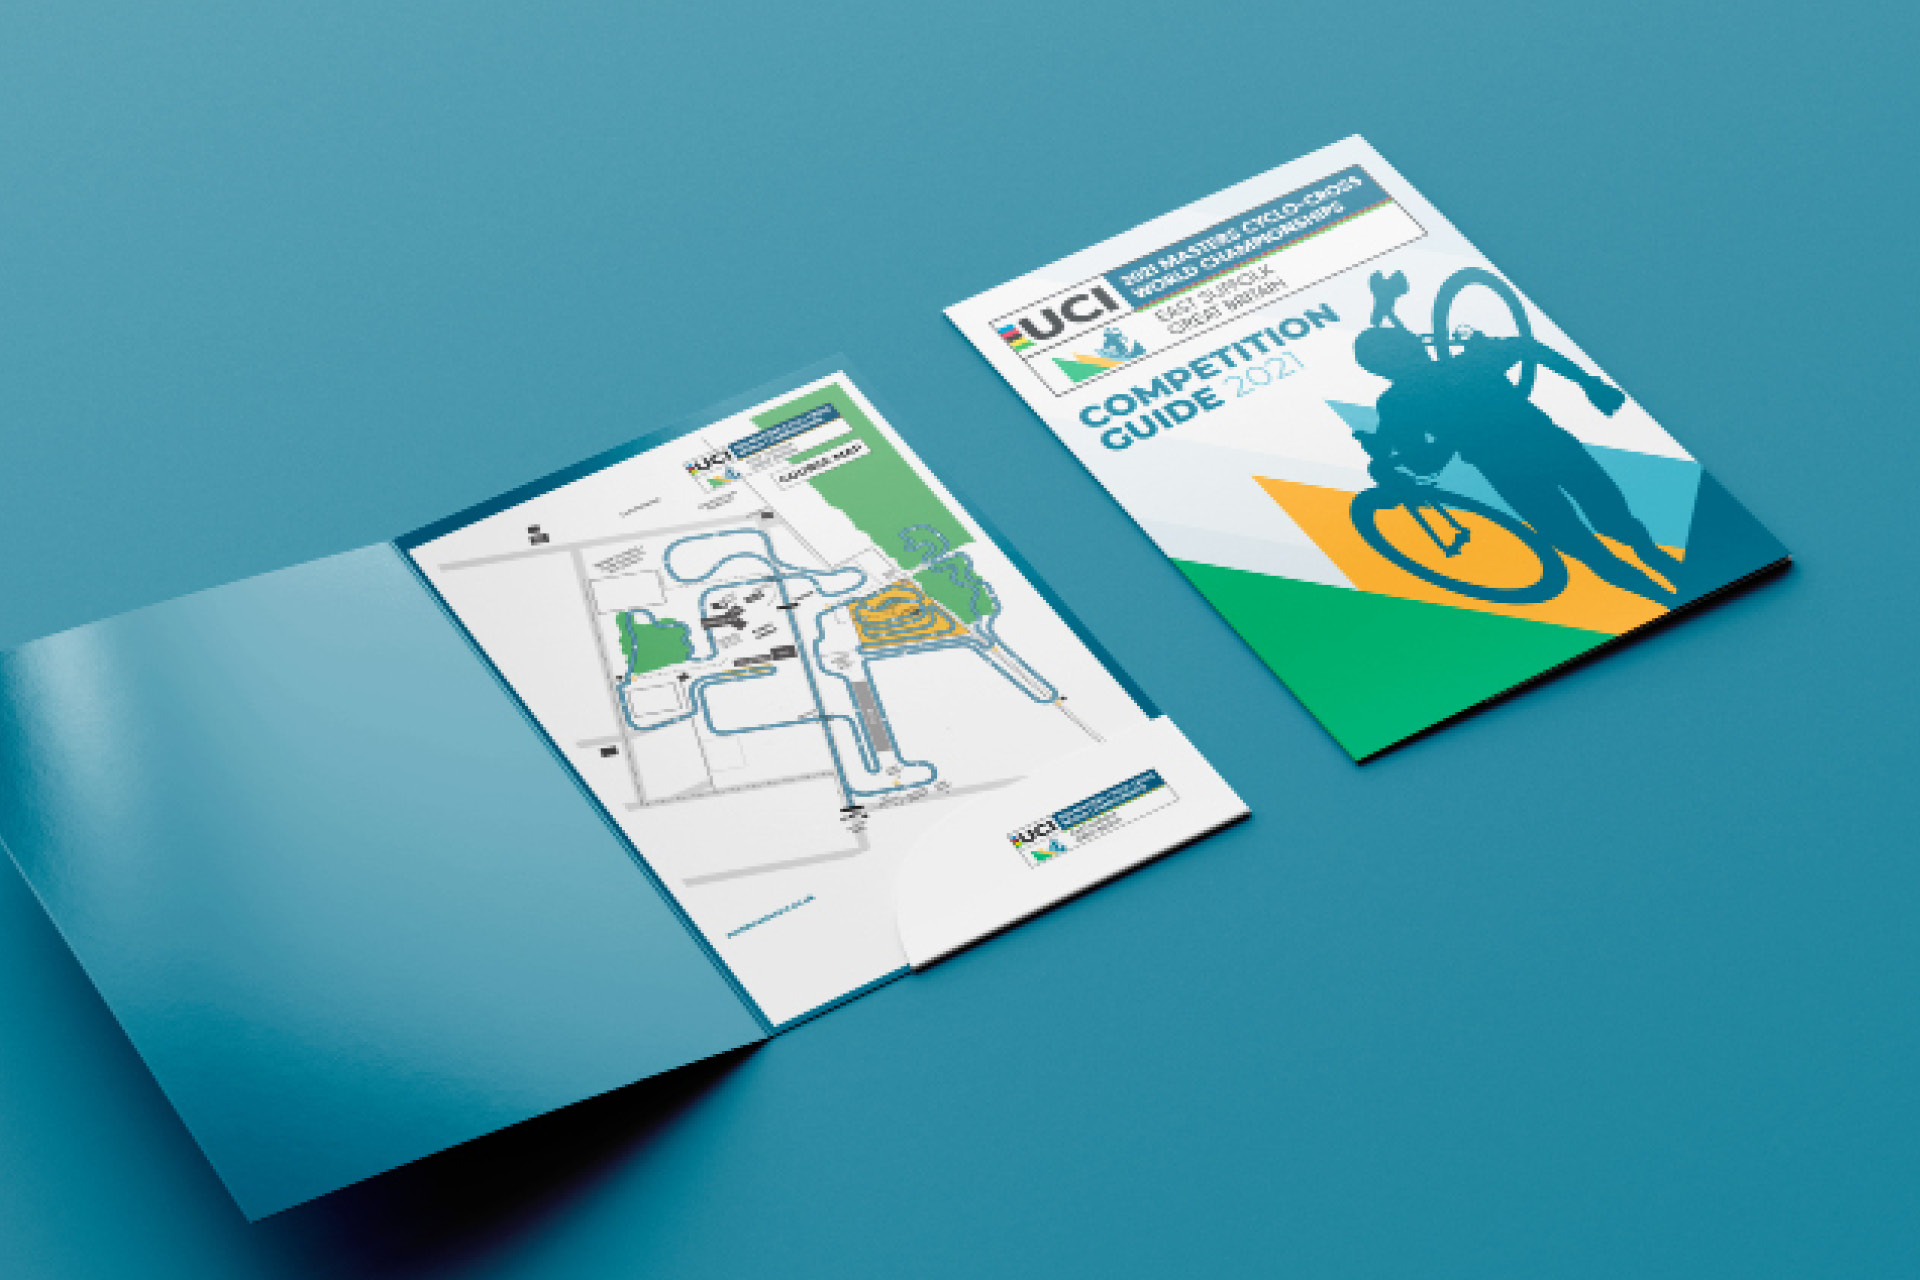 Uci masters cyclo-cross brochure folder design and print